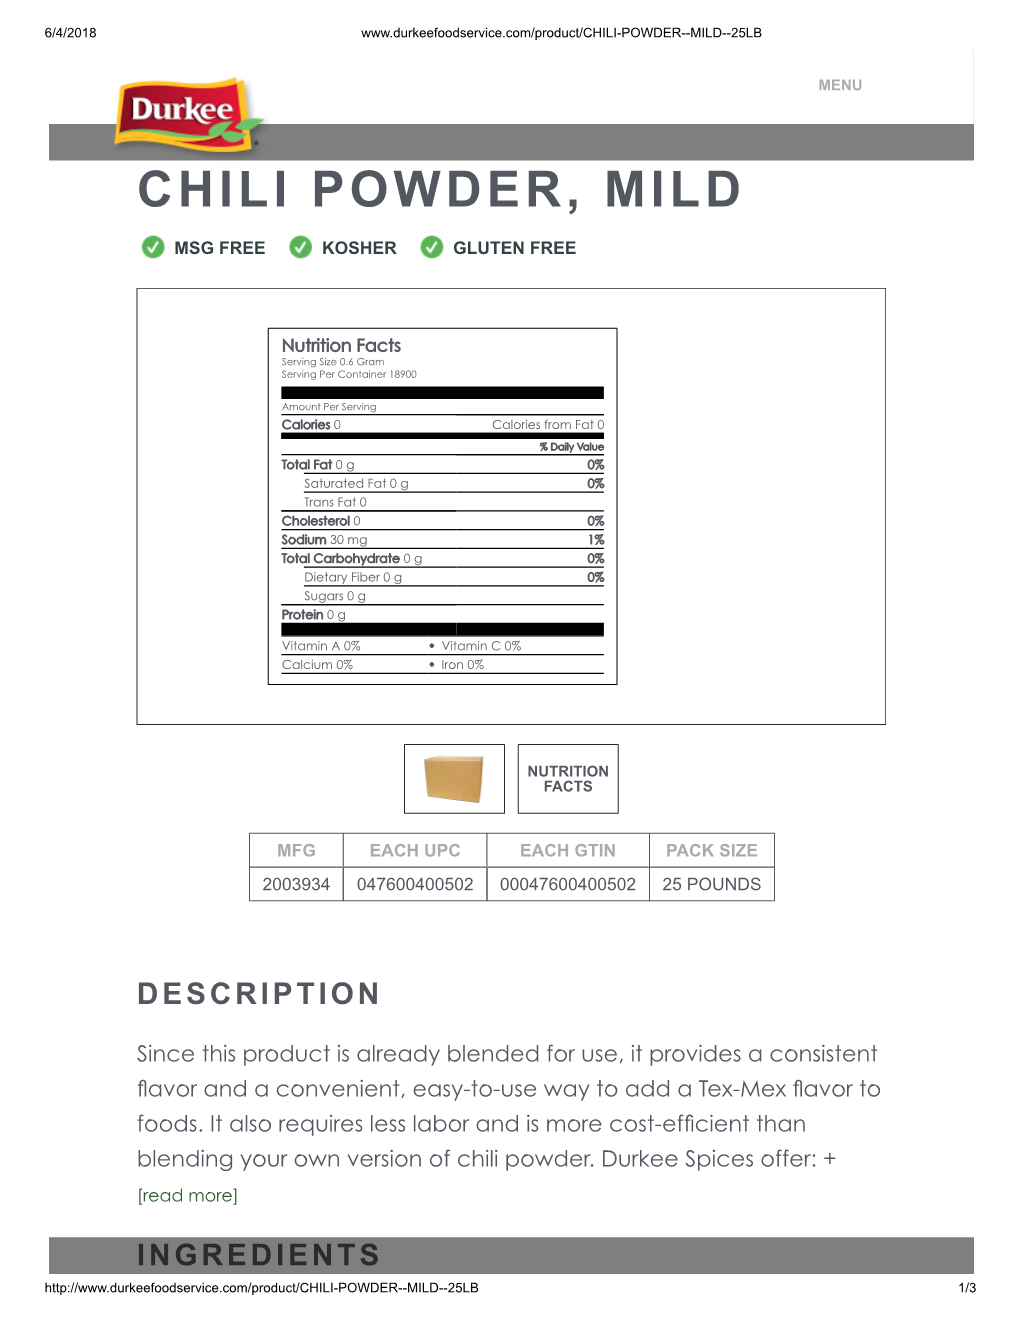 Chili Powder, Mild